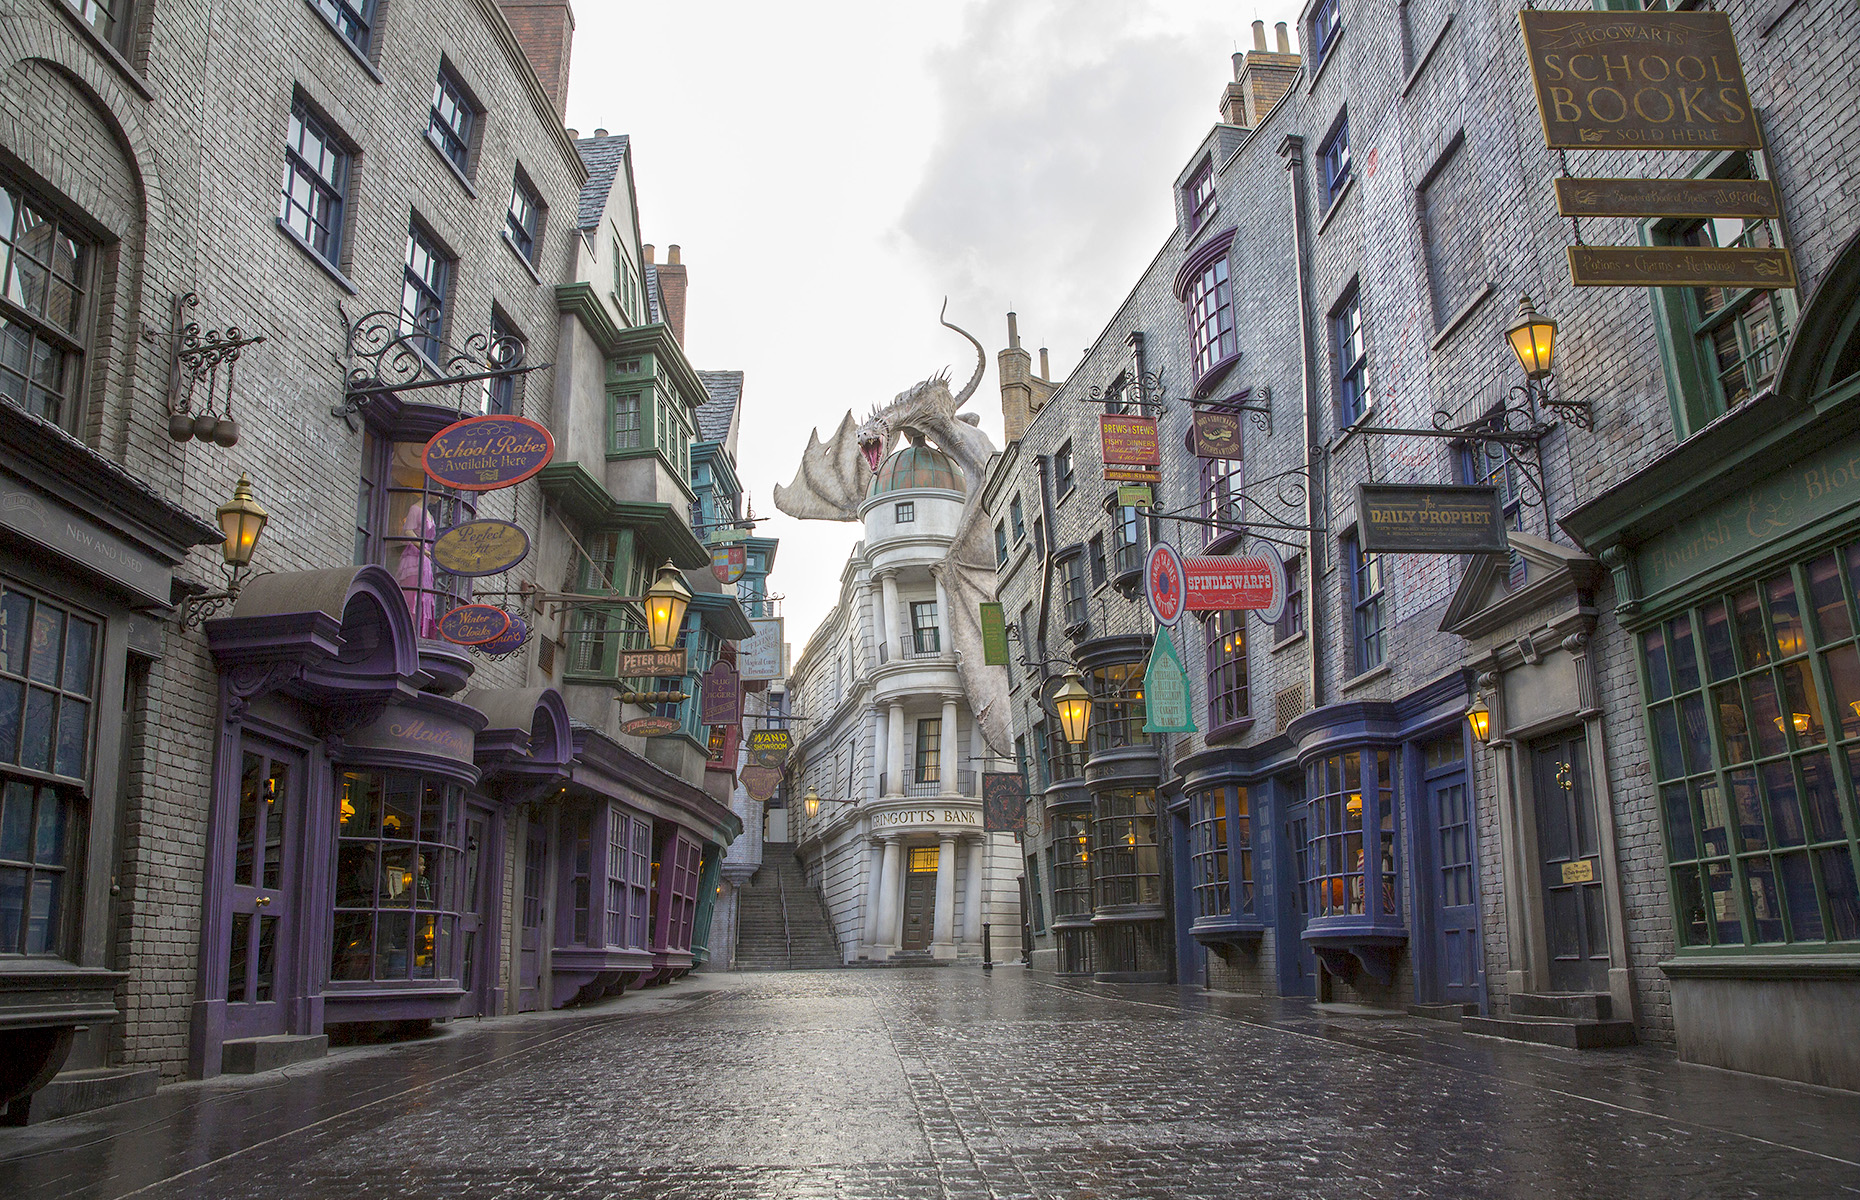 Diagon Alley at The Wizarding World of Harry Potter, Universal Orlando Resort. (Image: Universal Orlando Resort)